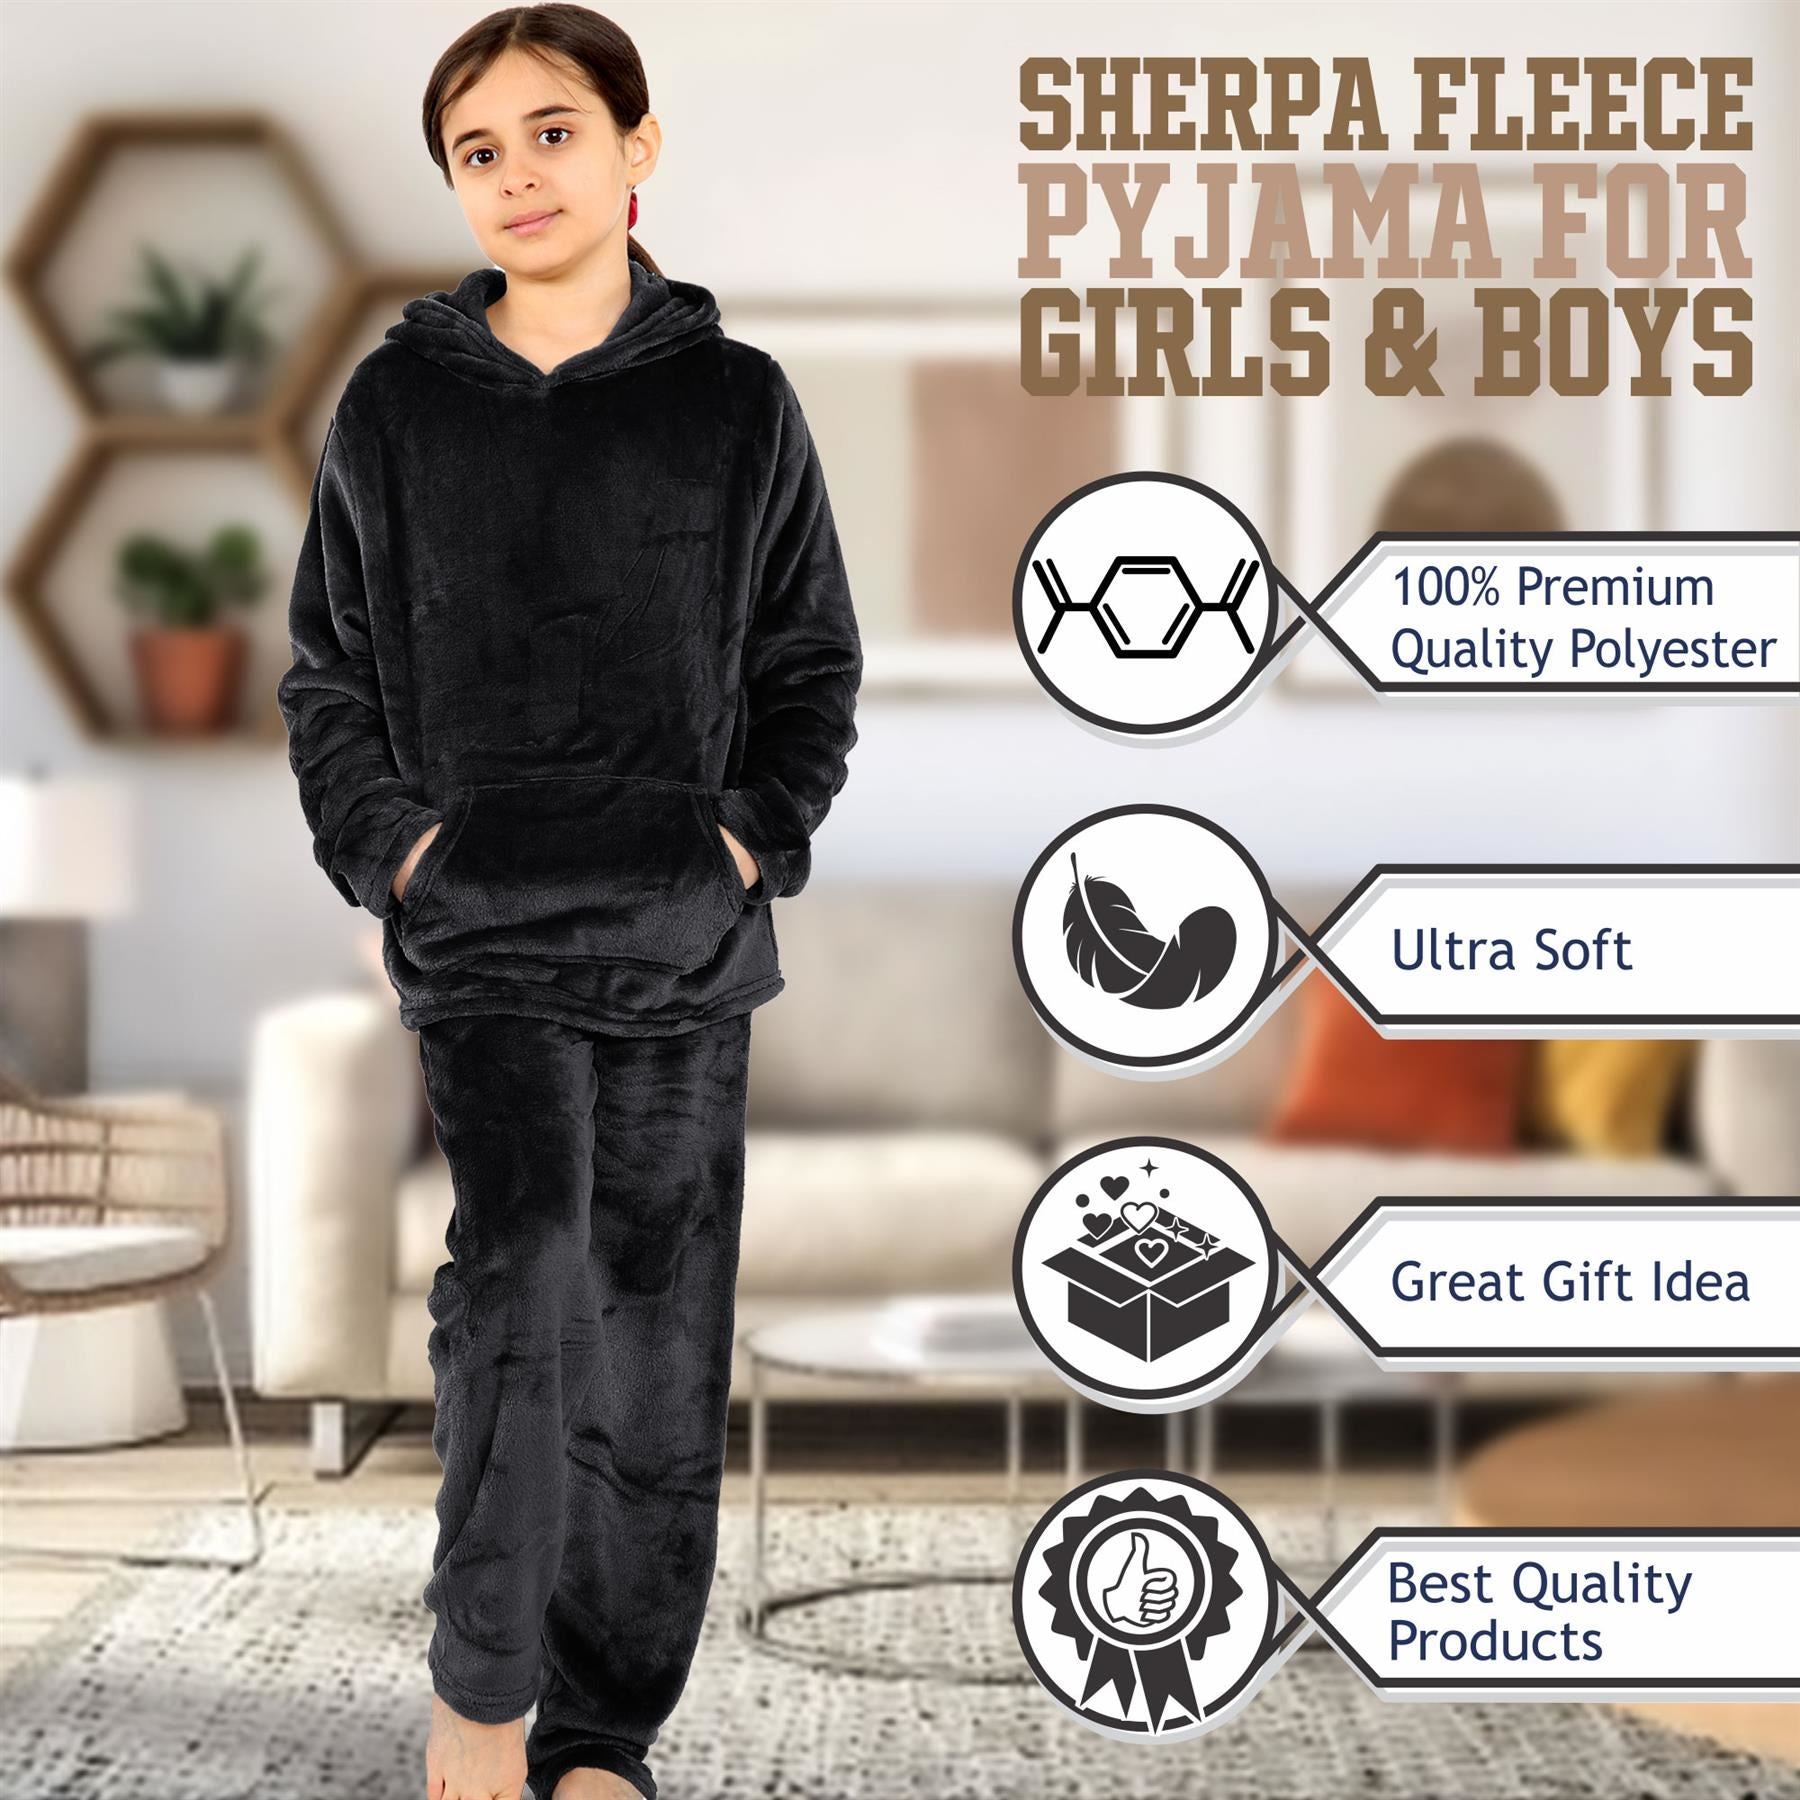 Kids Boys Girls Plain Hooded Warm Fleece Pyjamas 2 Piece PJS Set